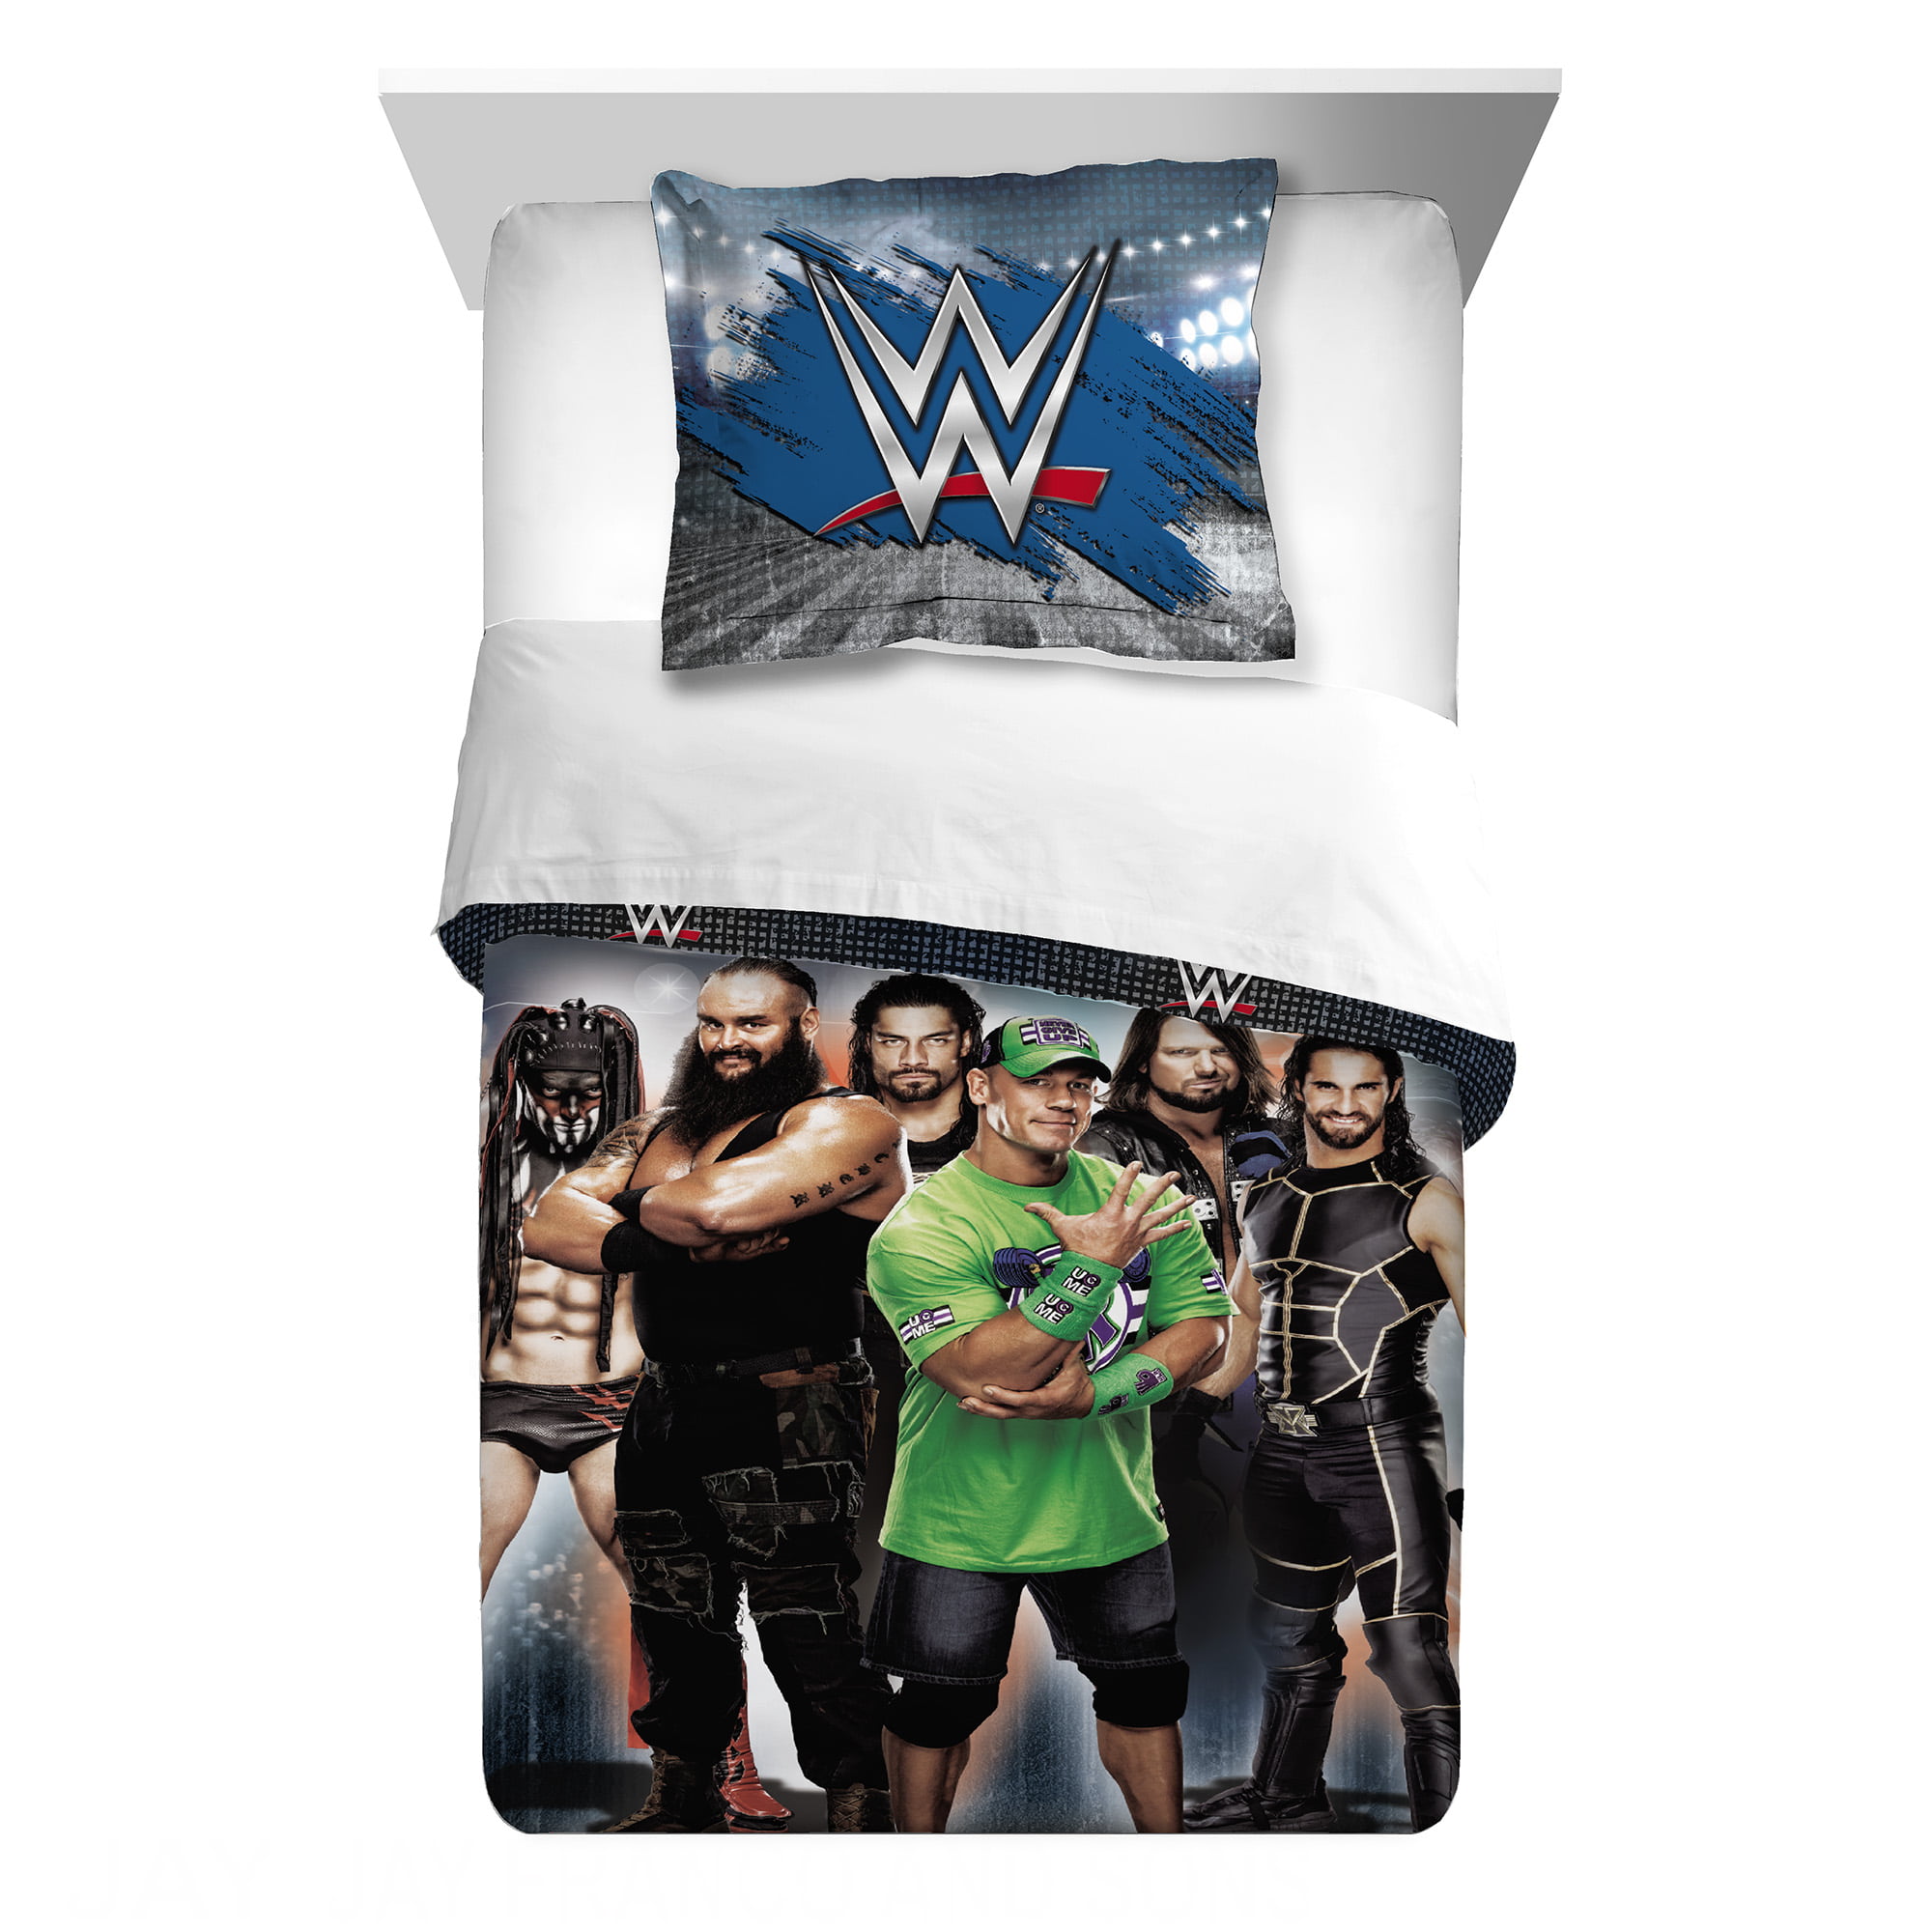 WWE Industrial Strength Twin 64x86 Microfiber Comforter 